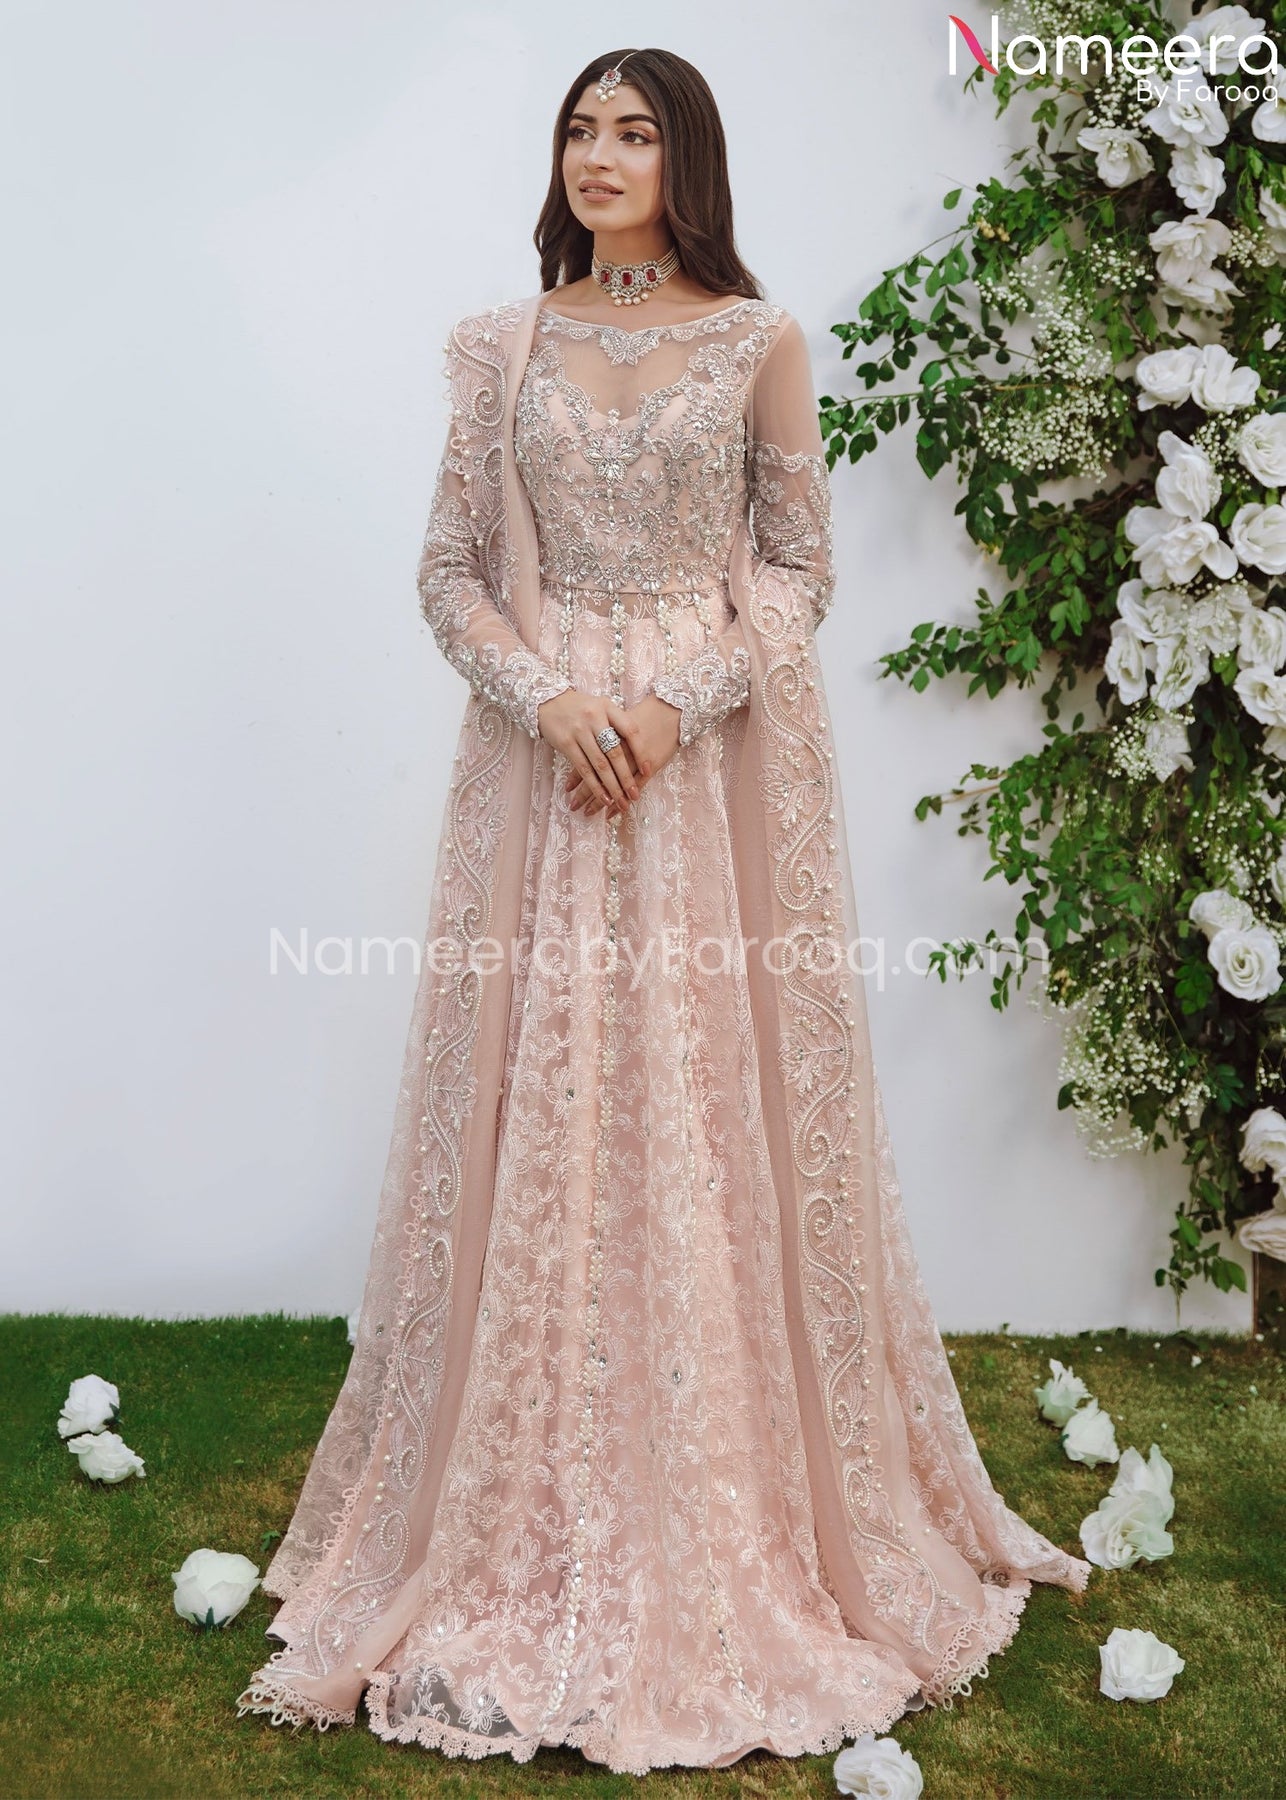 Pishwas with Lehenga Pink Bridal Dress Pakistani Online – Nameera by Farooq